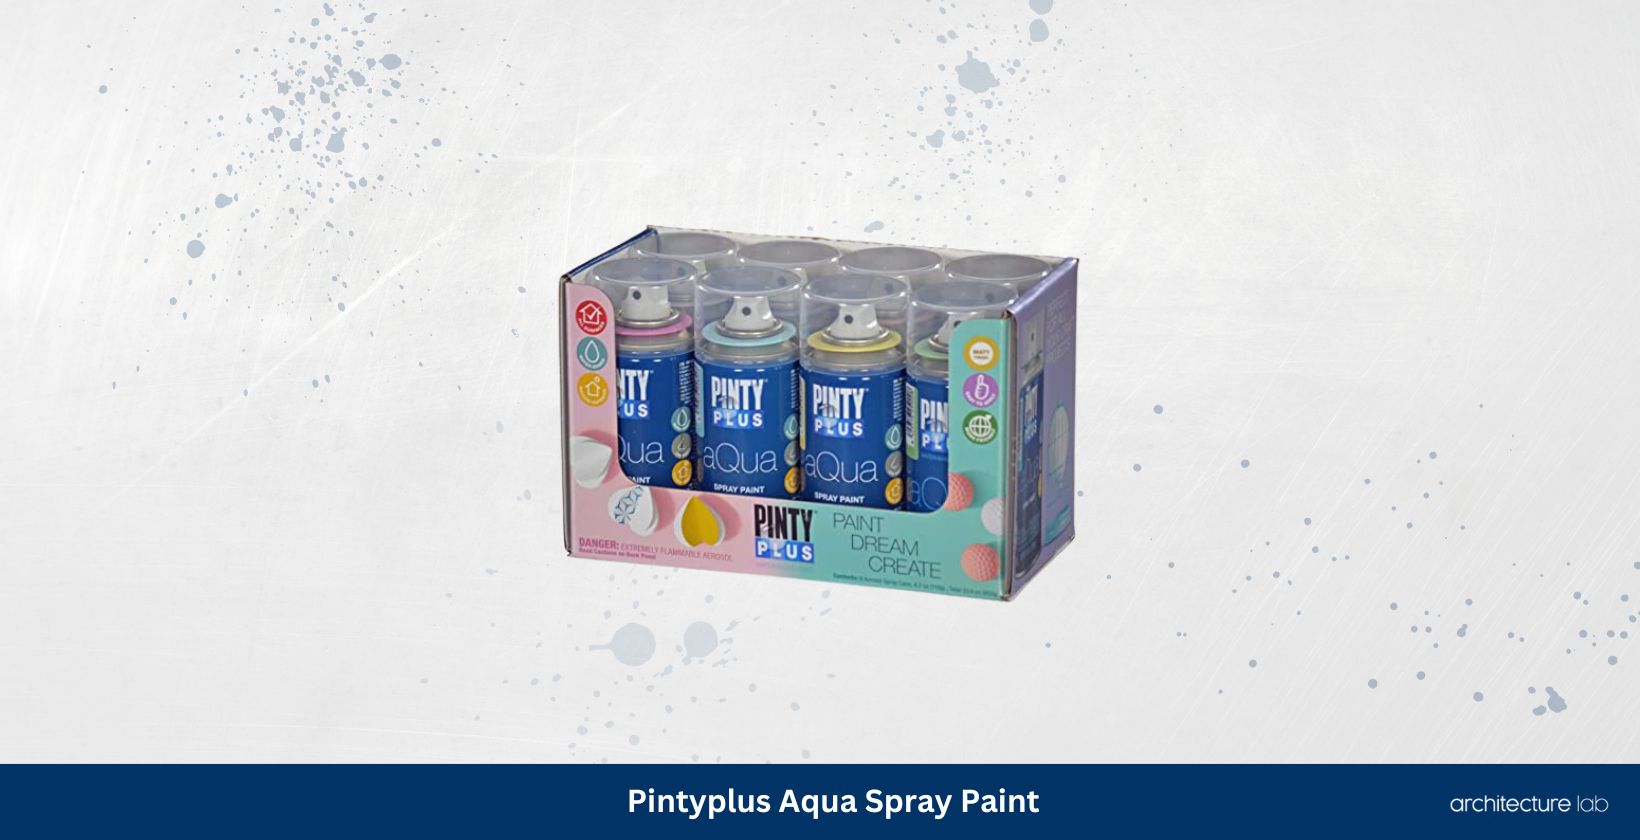 Pintyplus aqua spray paint